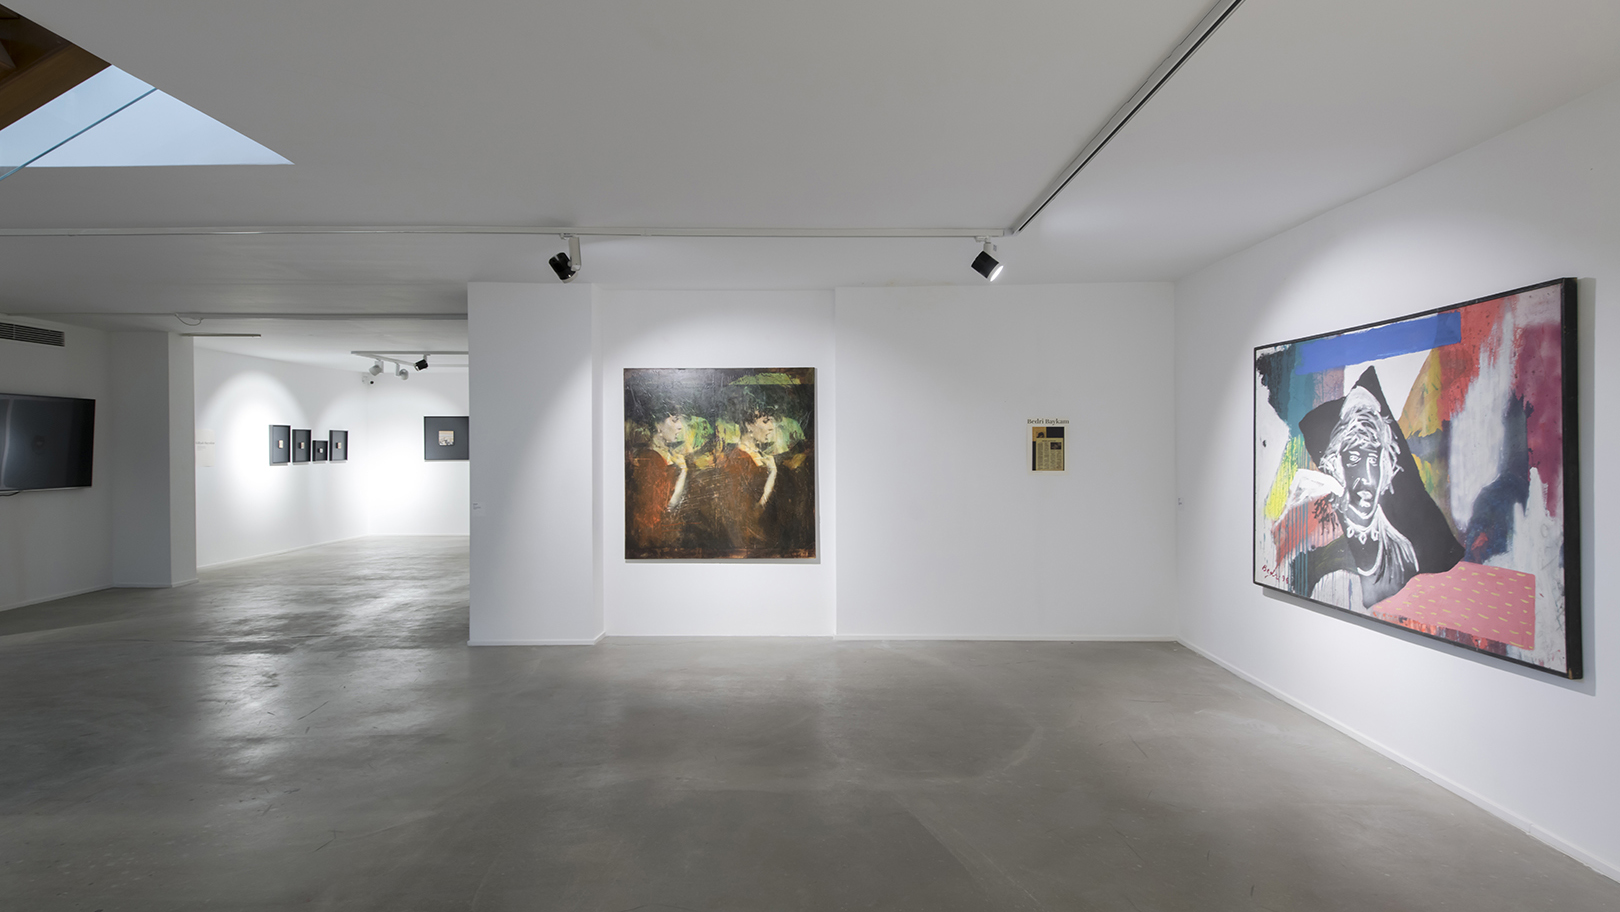 Left: Bedri Baykam, Reflection, 1996, mixed media on canvas, 135x205 cm. Right: Levent Morgök, Maria Callas, 2006, mixed media on canvas, 140x140 cm. Photo by Kayhan Kaygusuz.